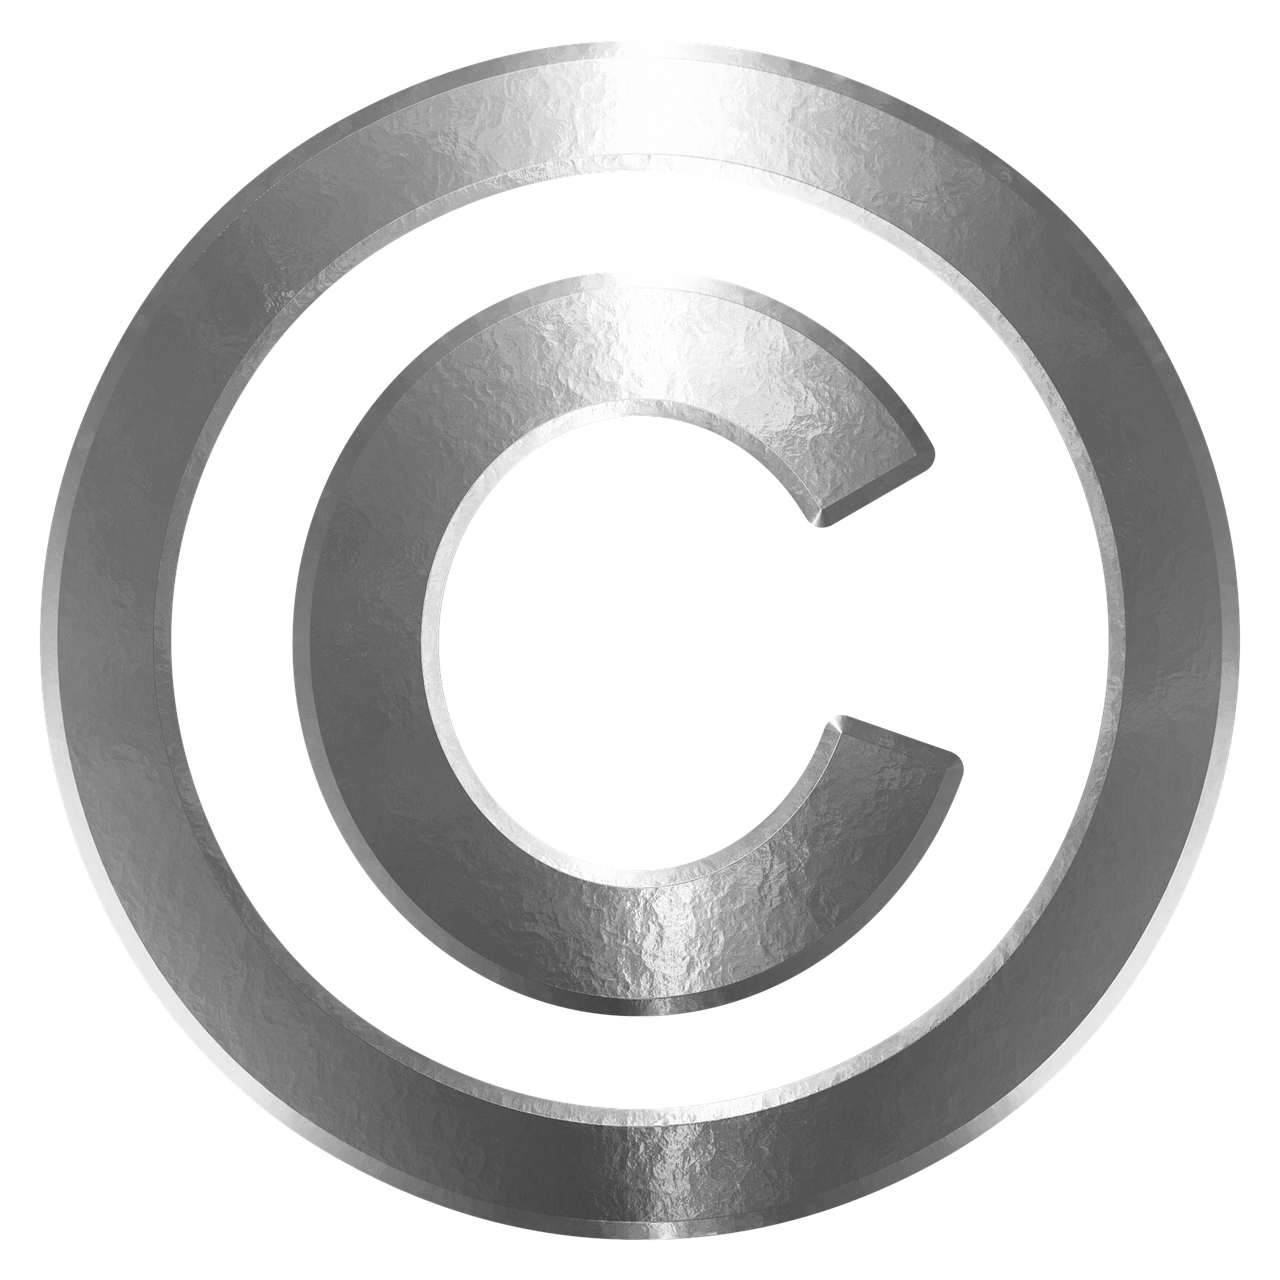 icon symbol copyright free photo